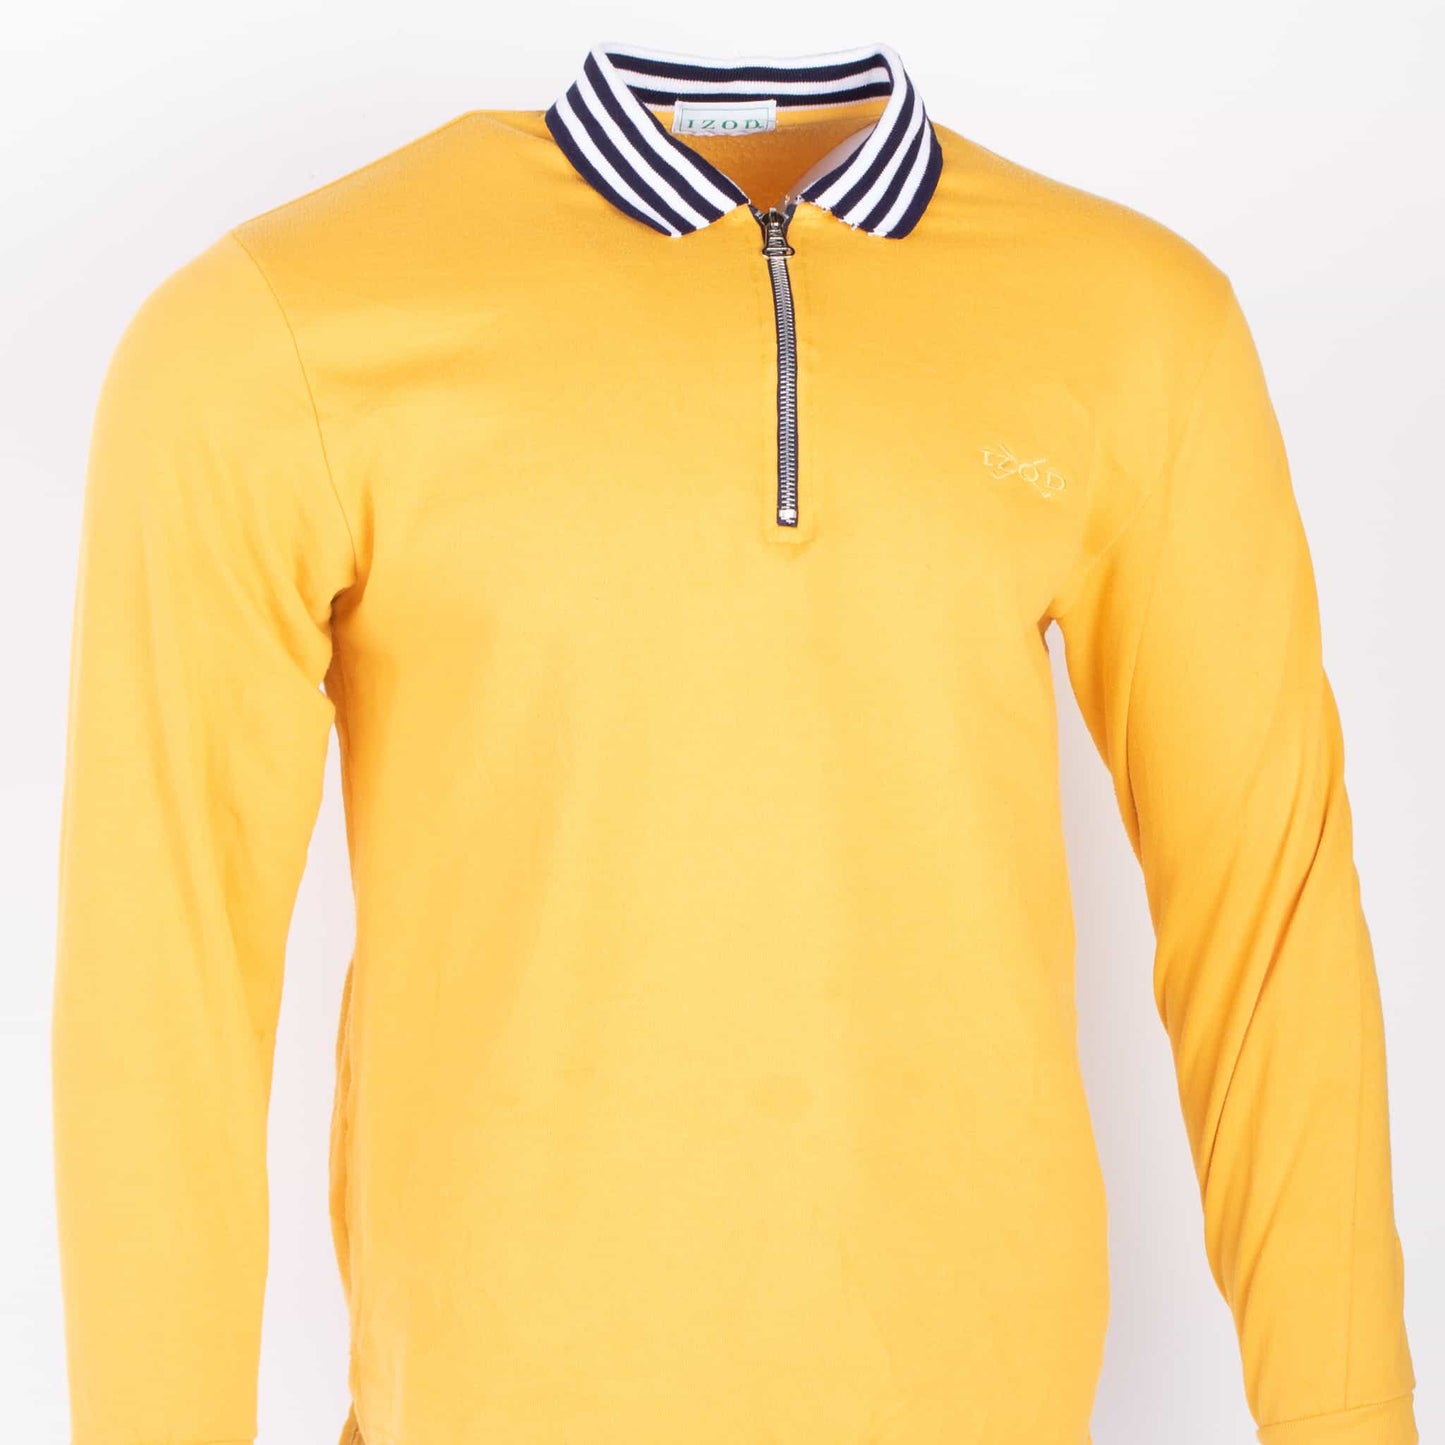 Vintage College Sweatshirt - Yellow - American Madness